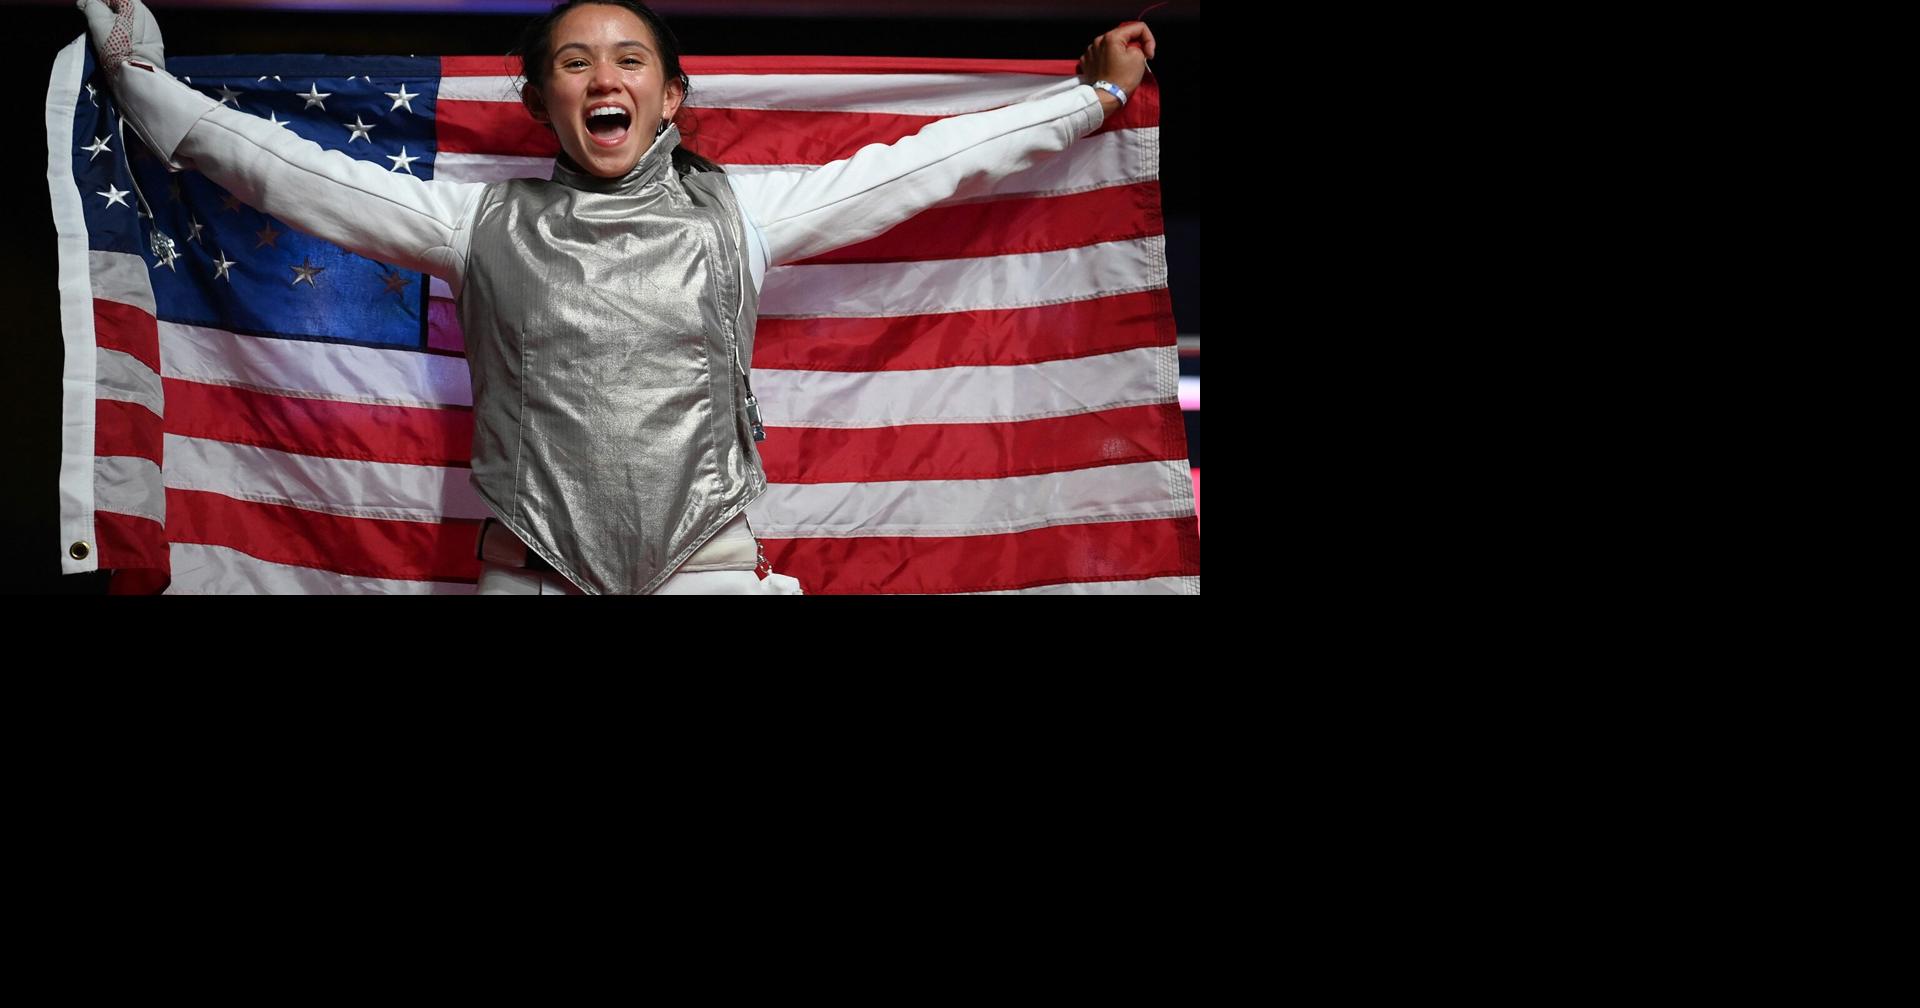 Lee Kiefer celebrates winning a gold medal in women's individual foil